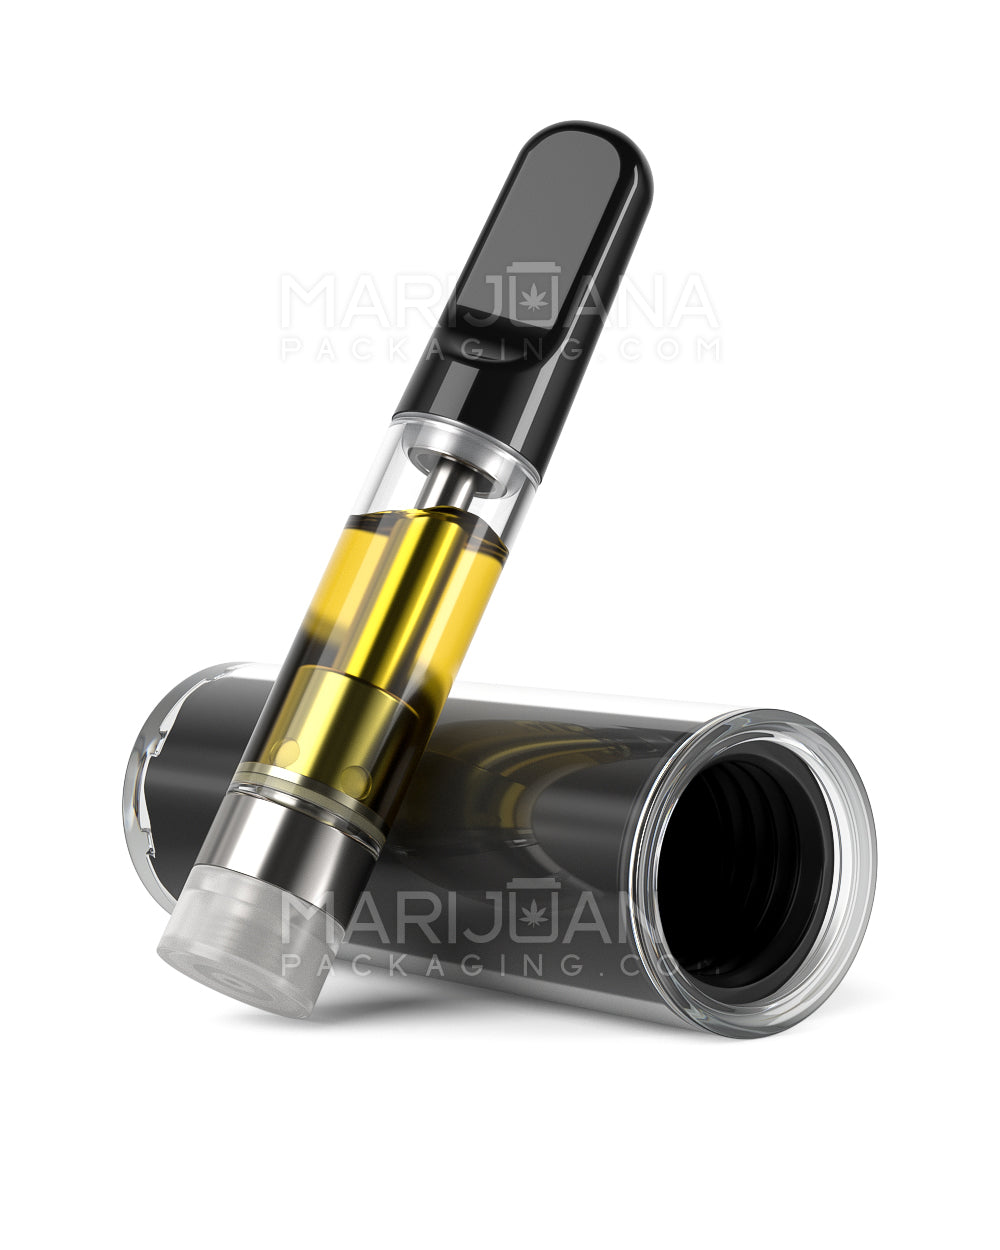 Child Resistant | Vape Cartridge Tube w/ Black Plastic Insert | 80mm - Black - 100 Count - 3